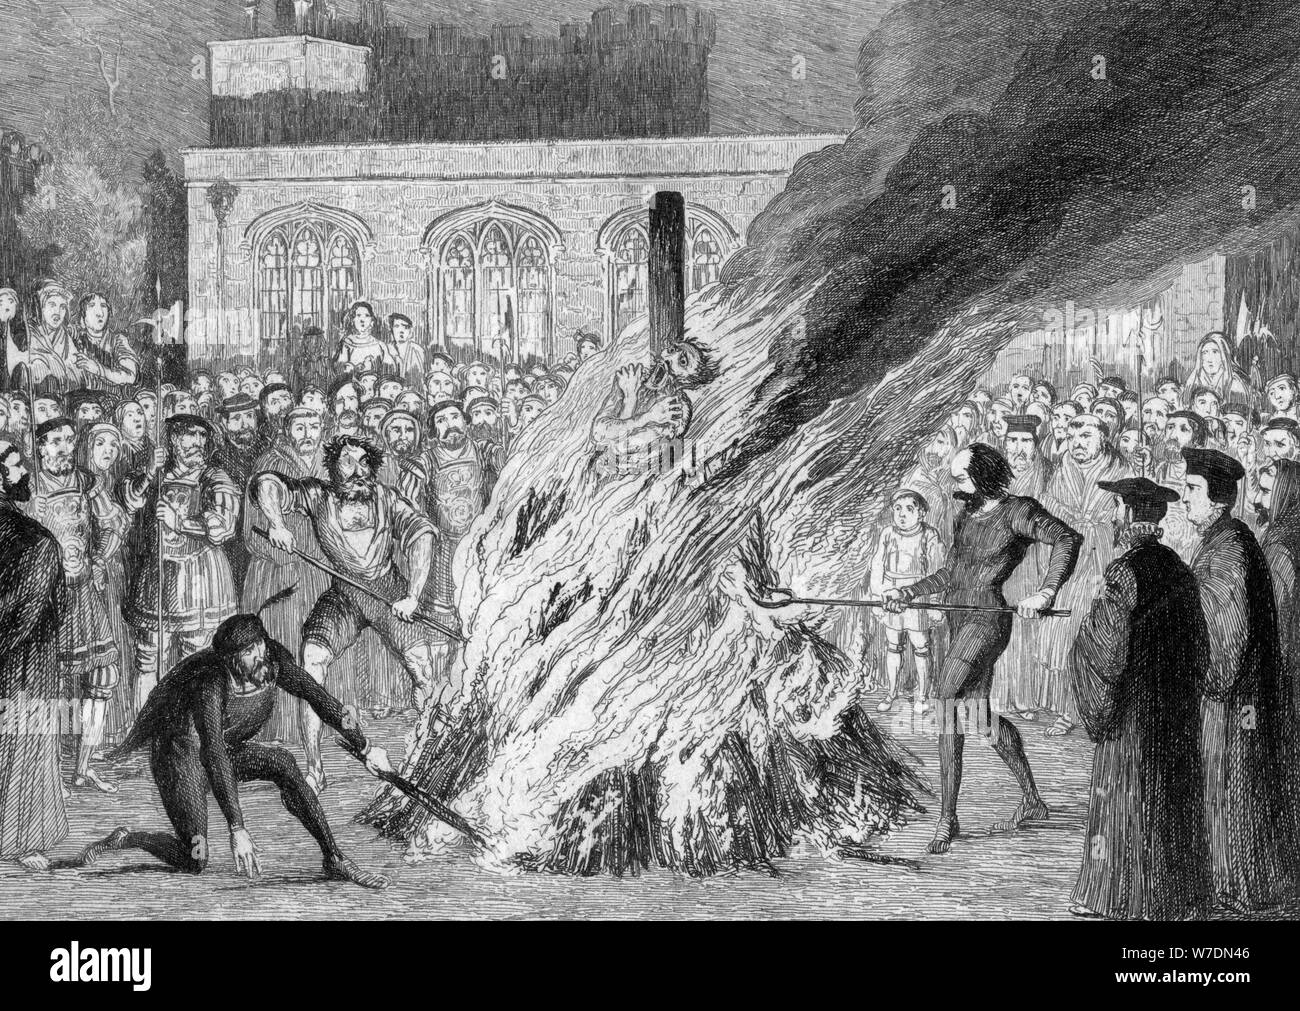 The Burning of Edward Underhill on Tower Green, 1840. Artist: George Cruikshank Stock Photo